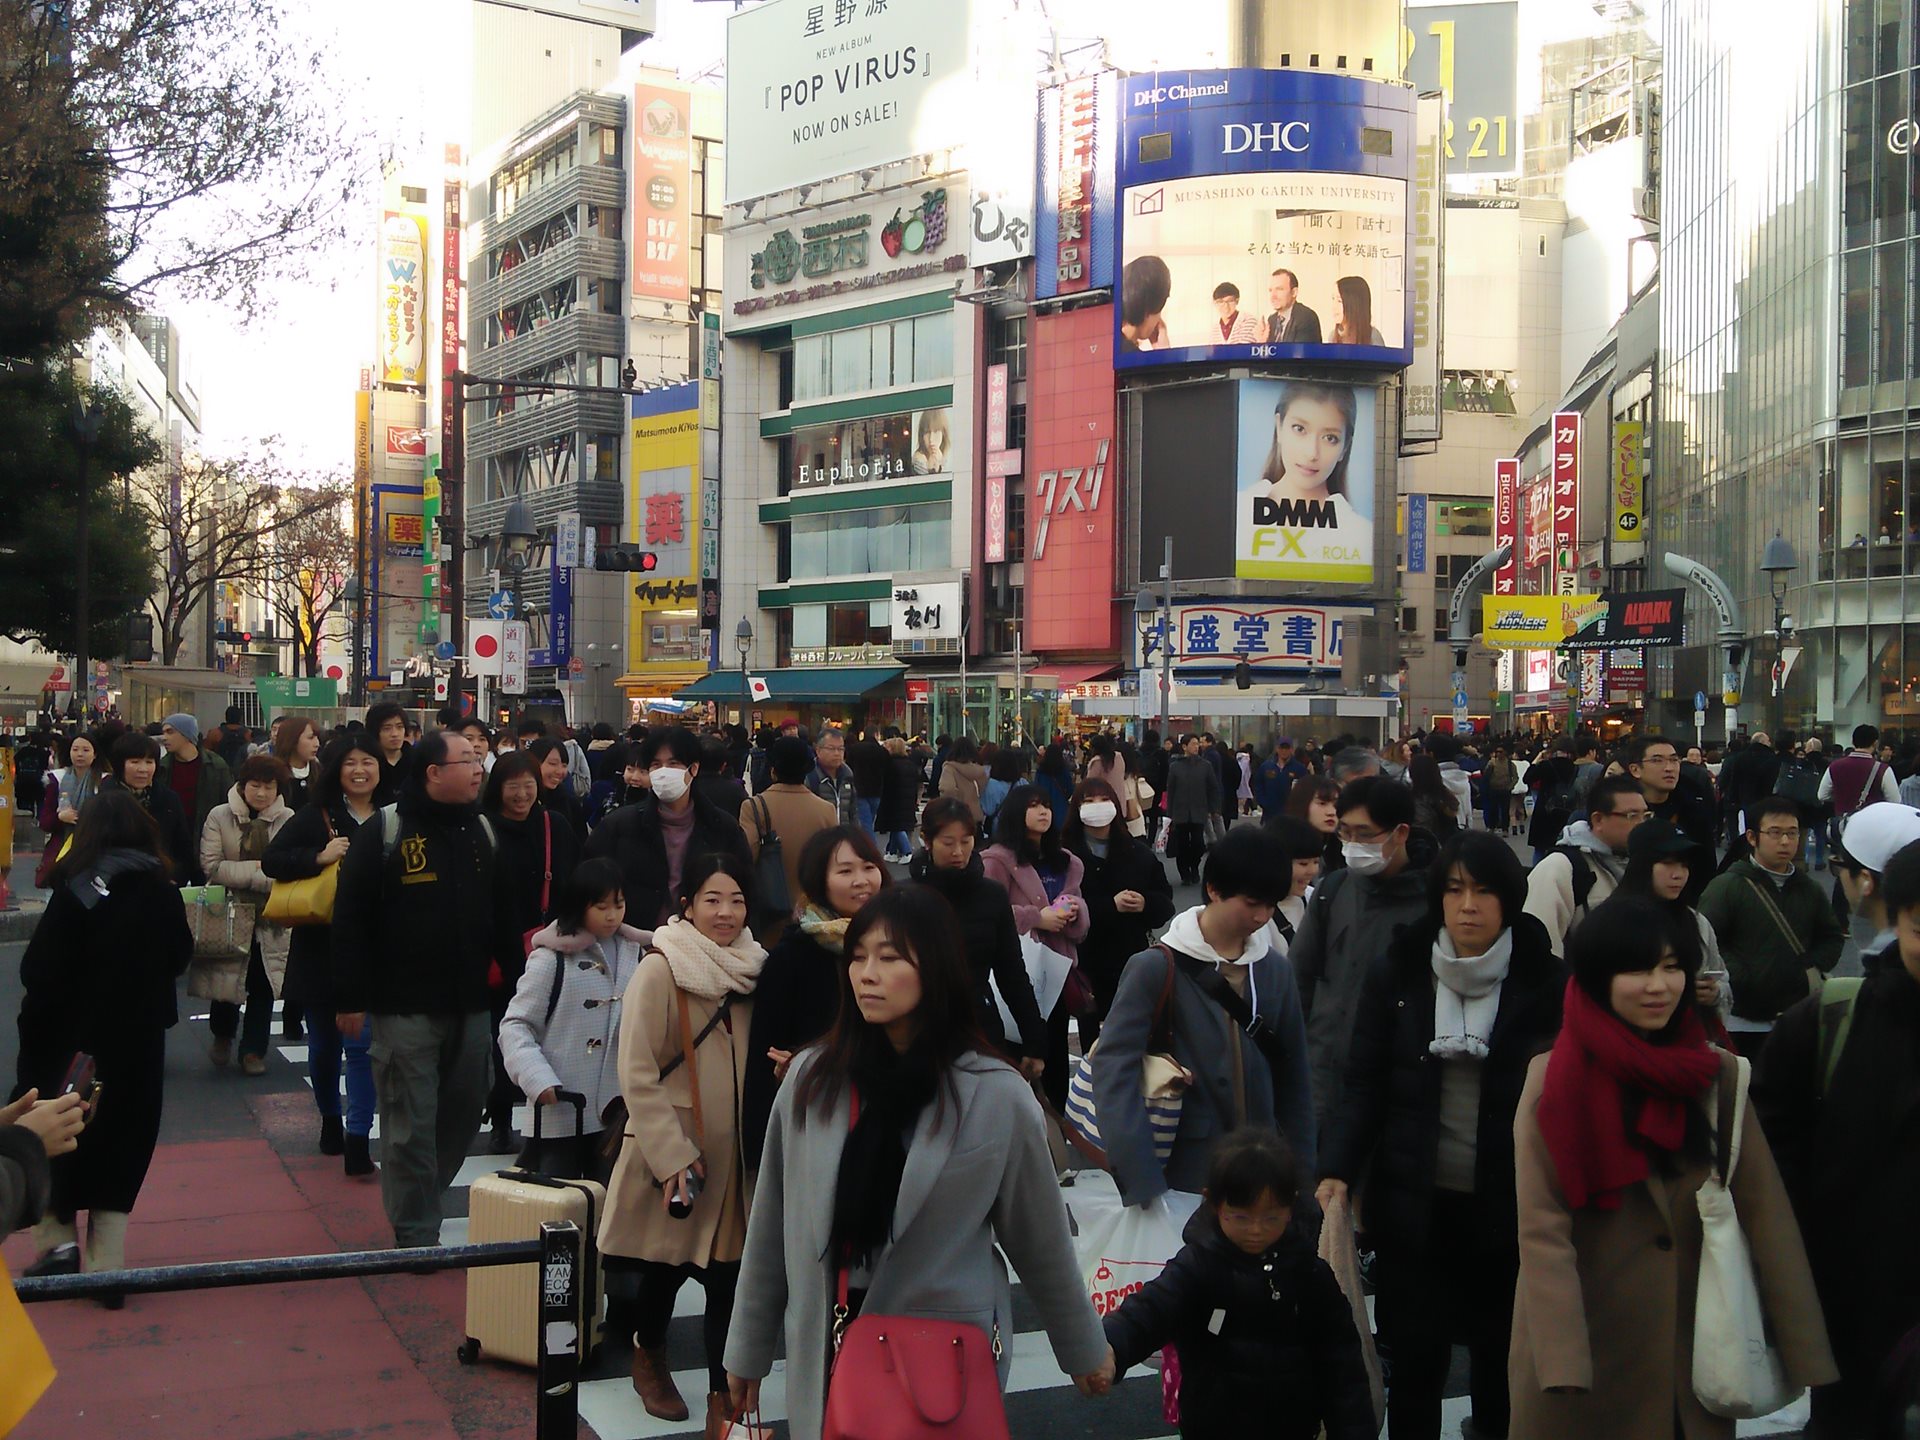 Japanese CBD crowd and advertising